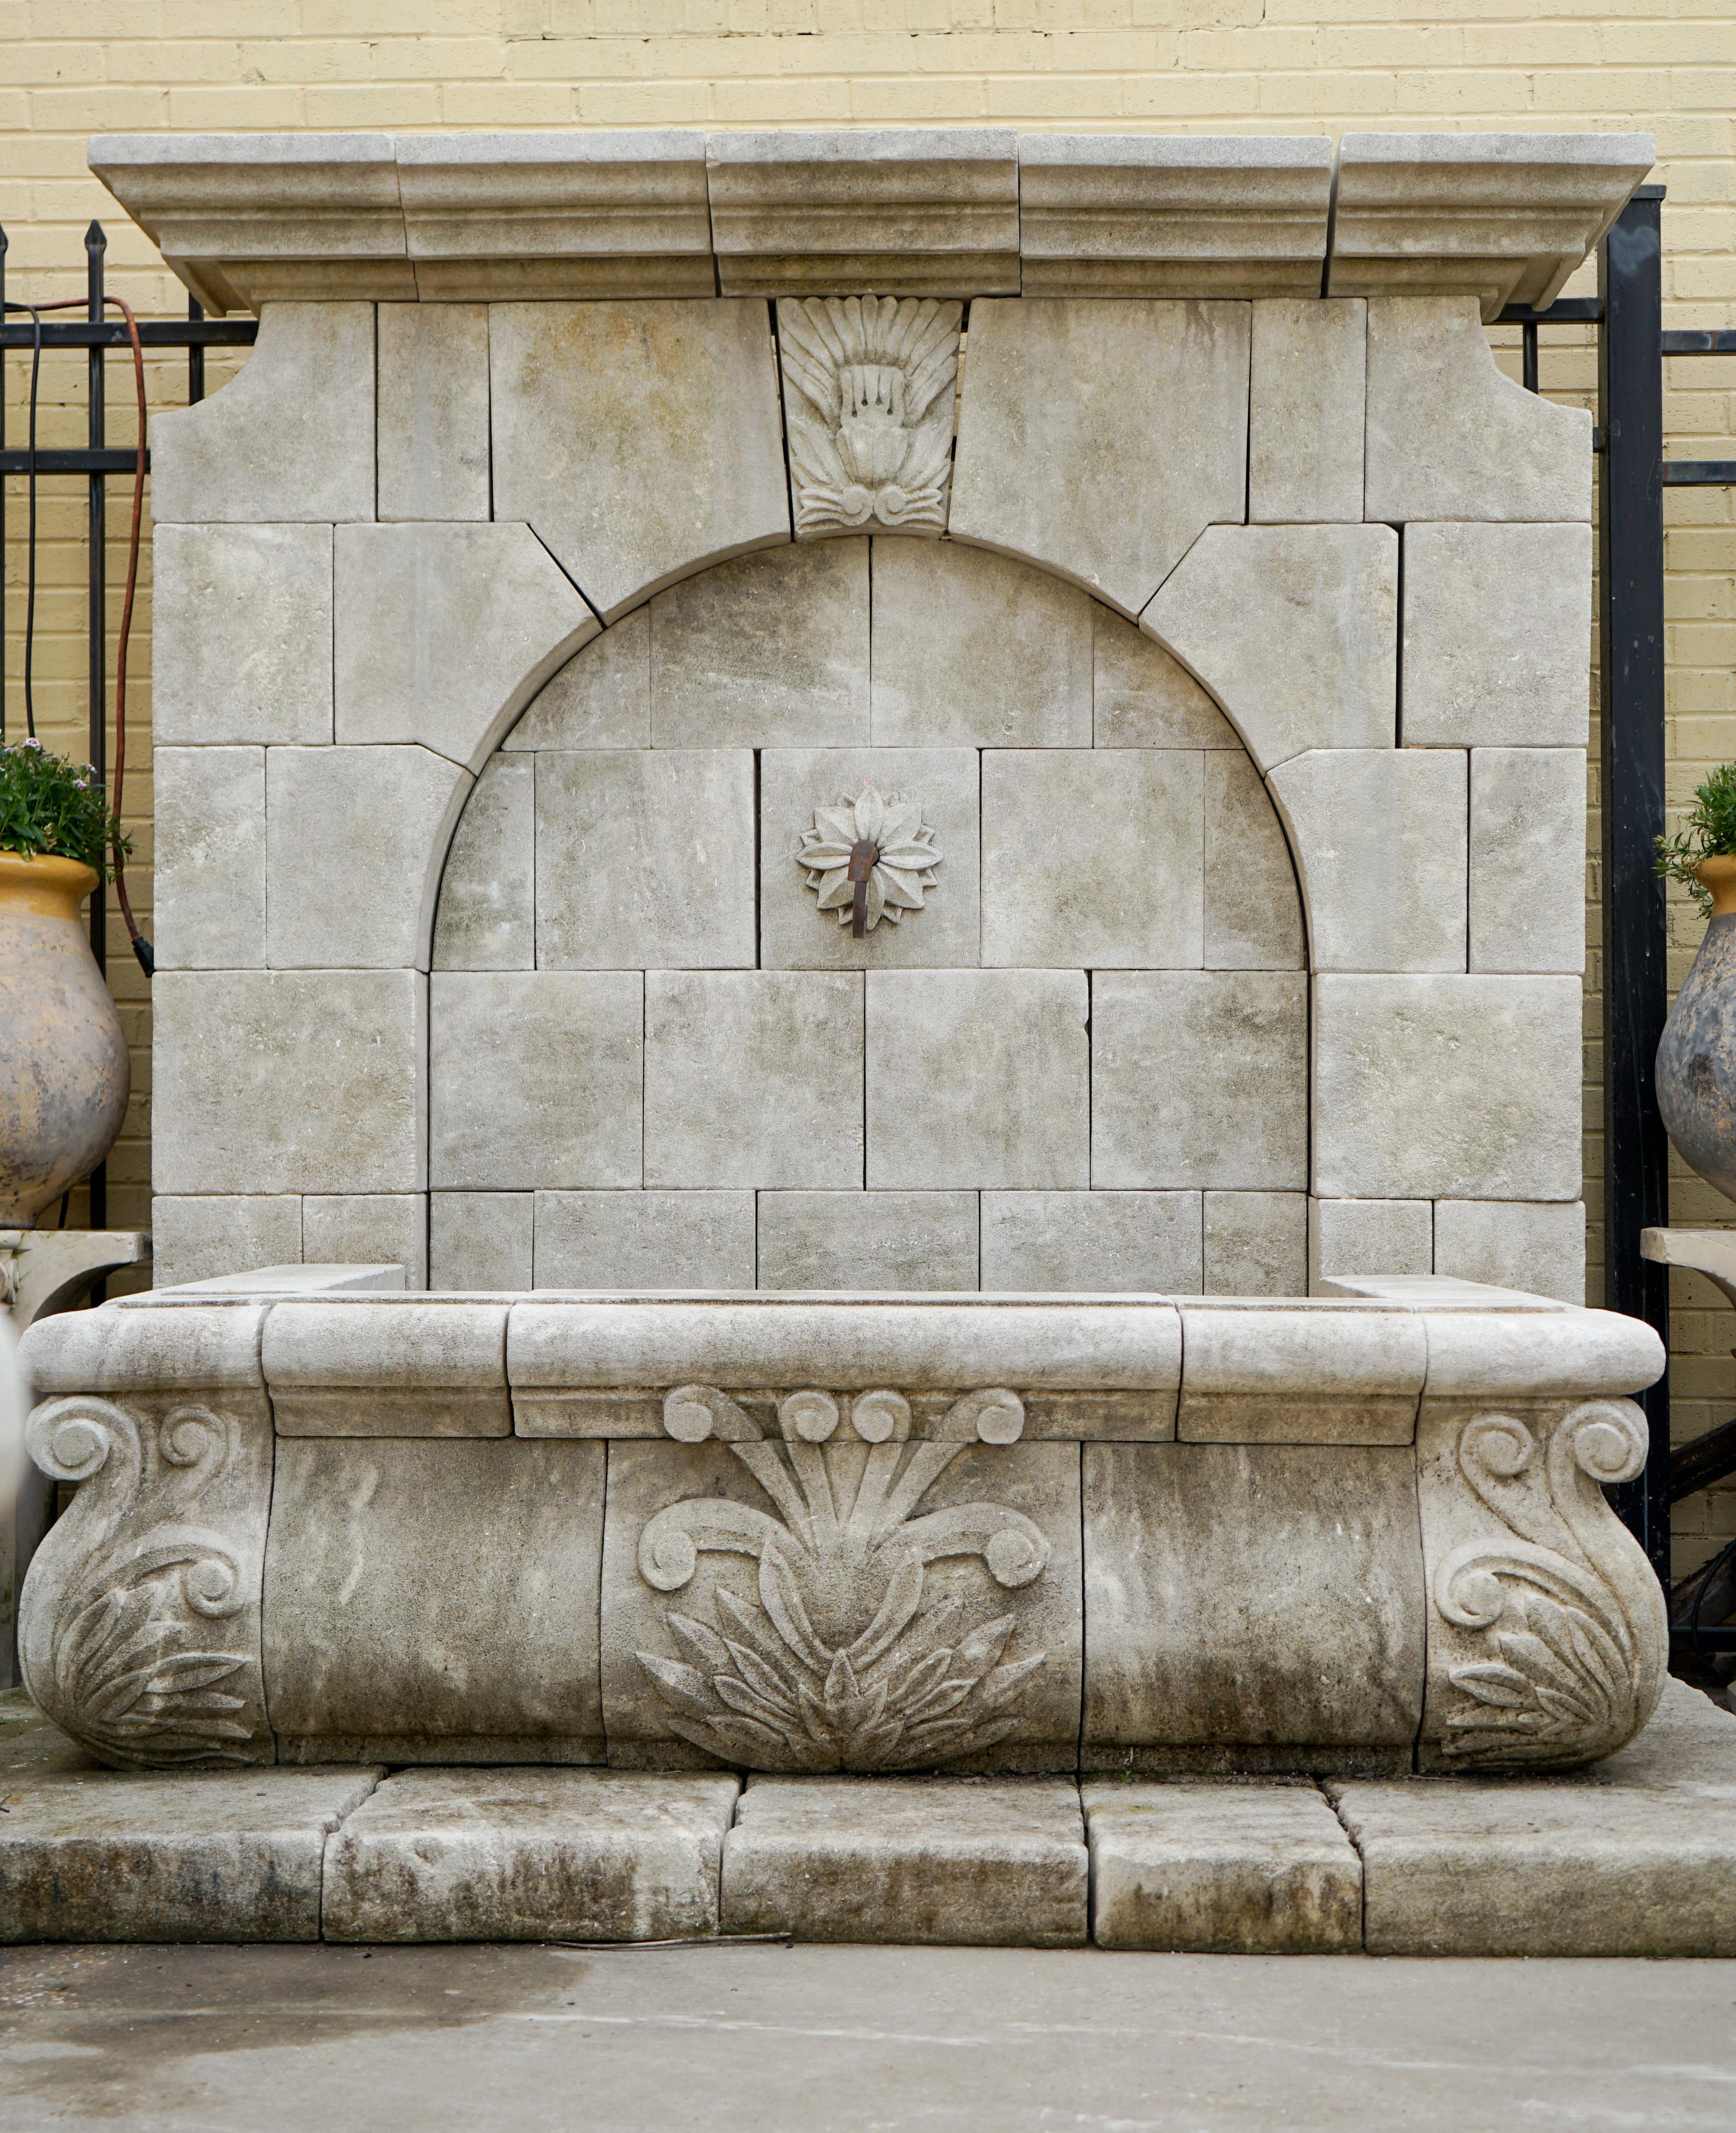 gothic fountain